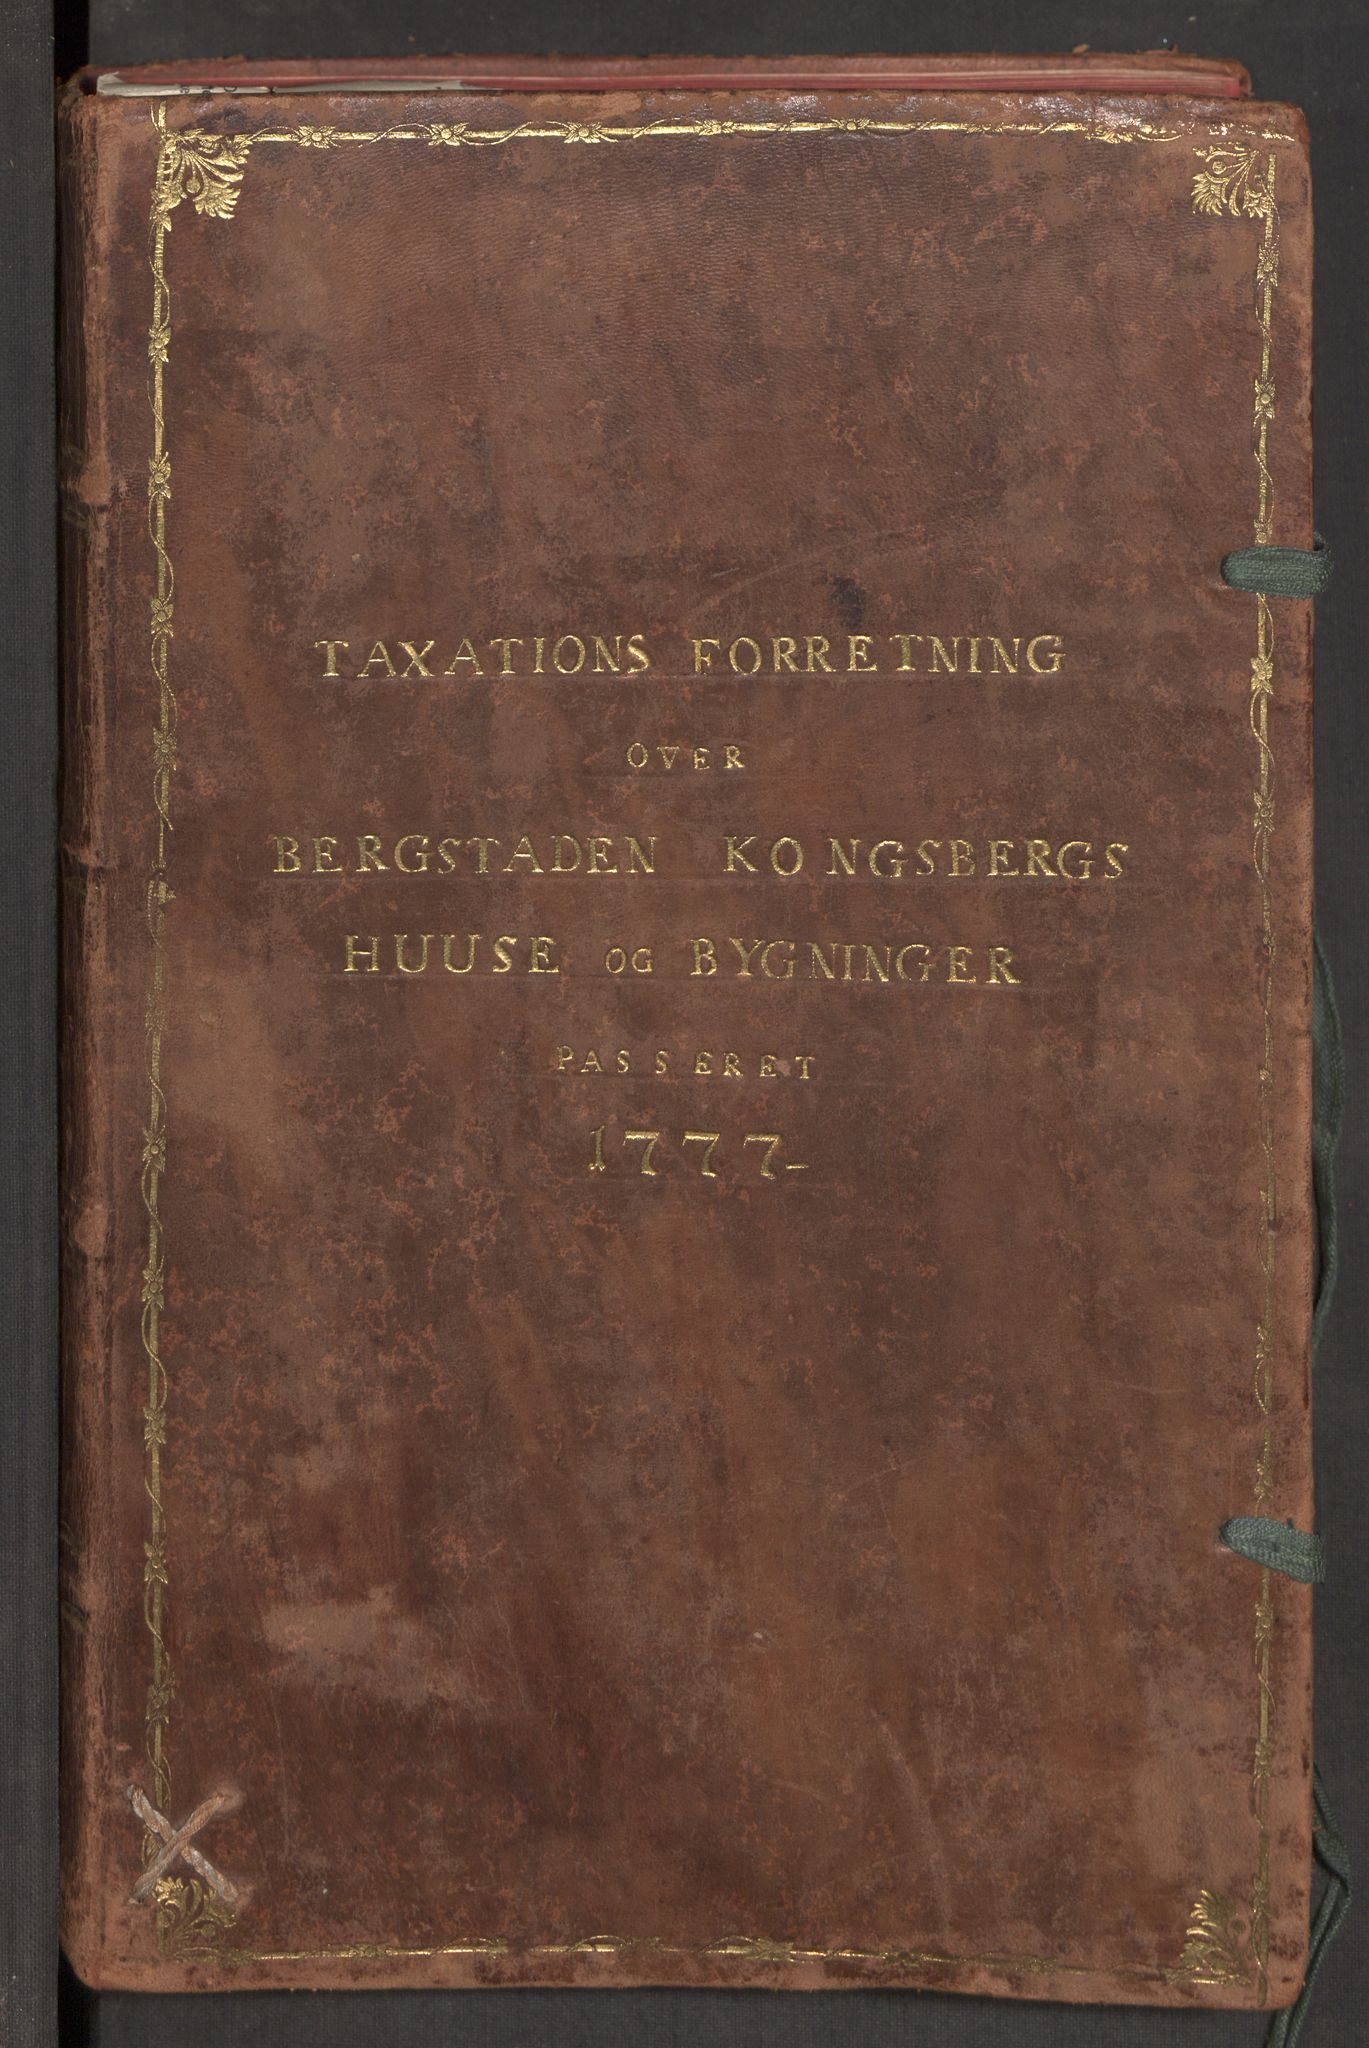 Kommersekollegiet, Brannforsikringskontoret 1767-1814, RA/EA-5458/F/Fa/L0029/0002: Kongsberg / Branntakstprotokoll, 1777